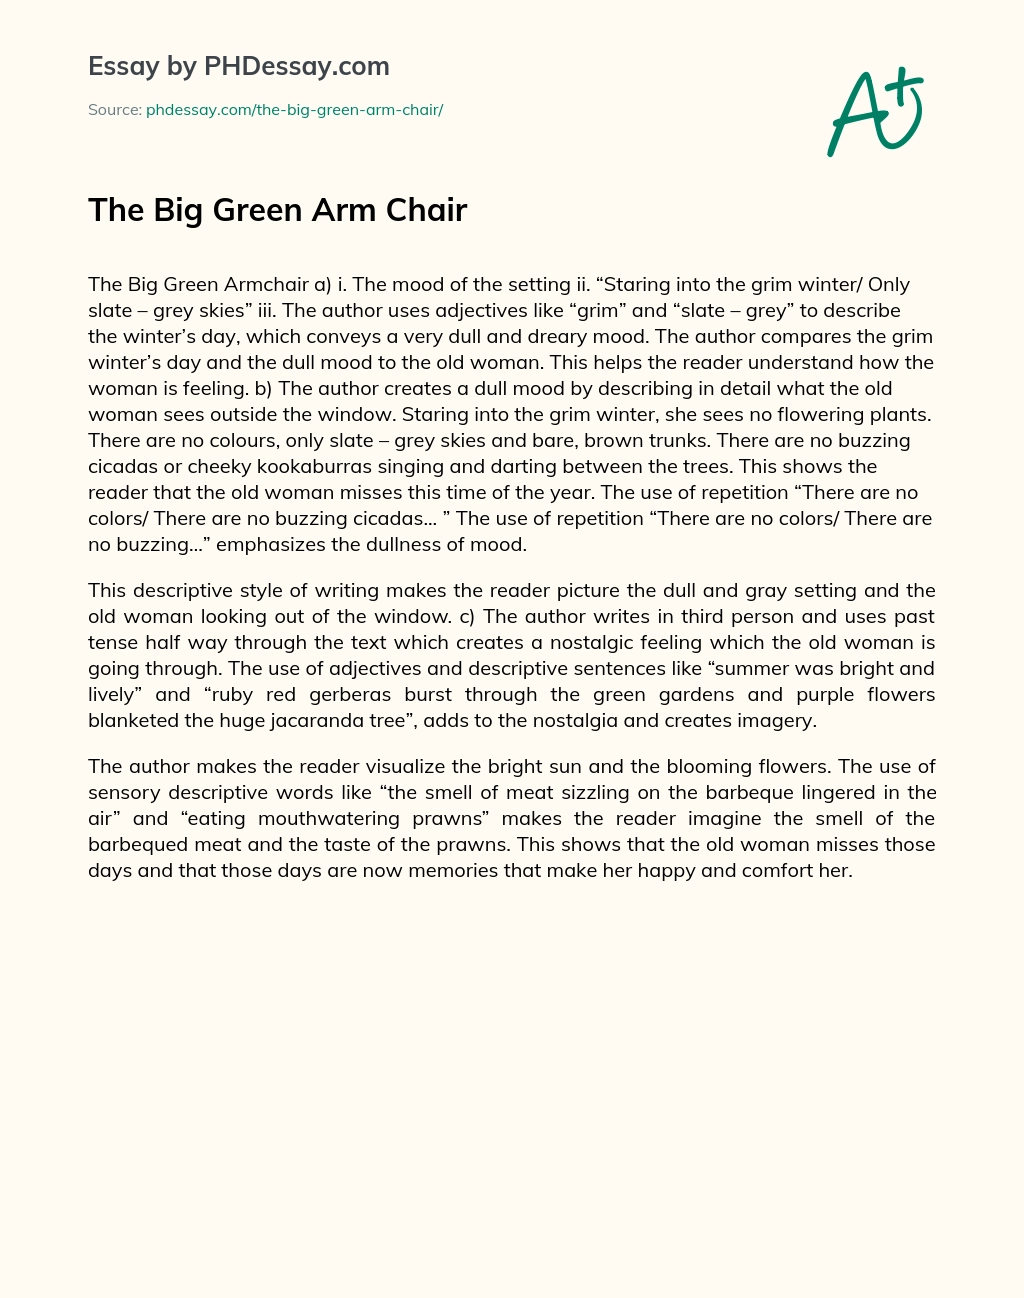 The Big Green Arm Chair essay